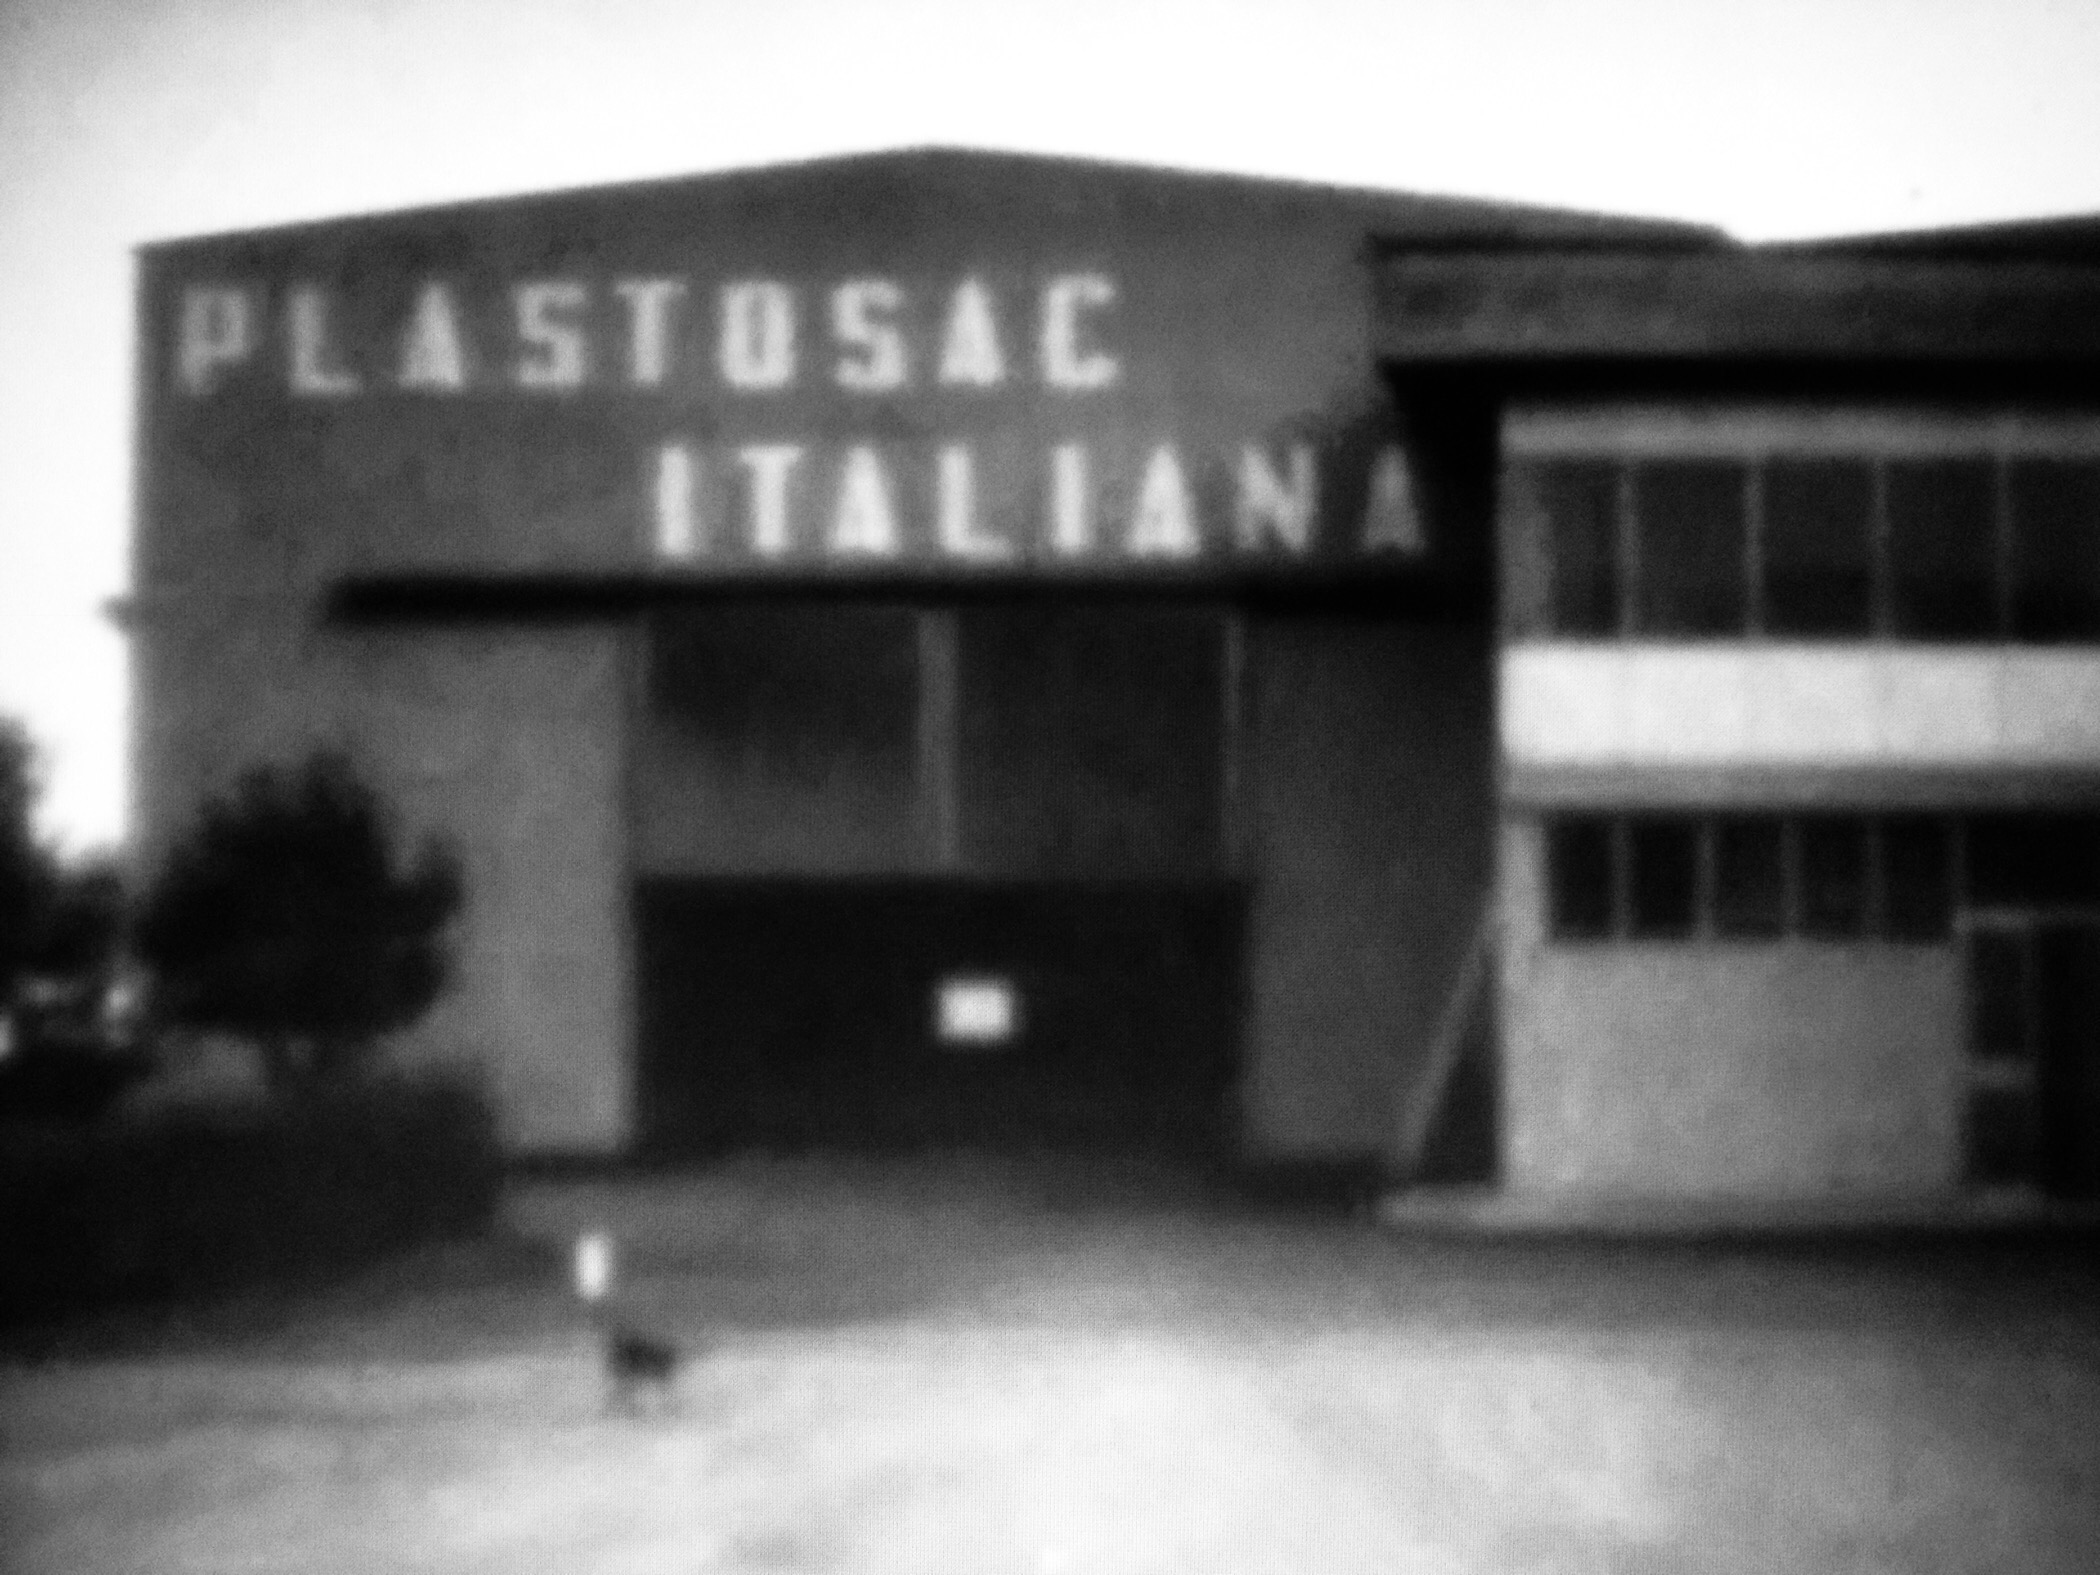 plastosac_1981